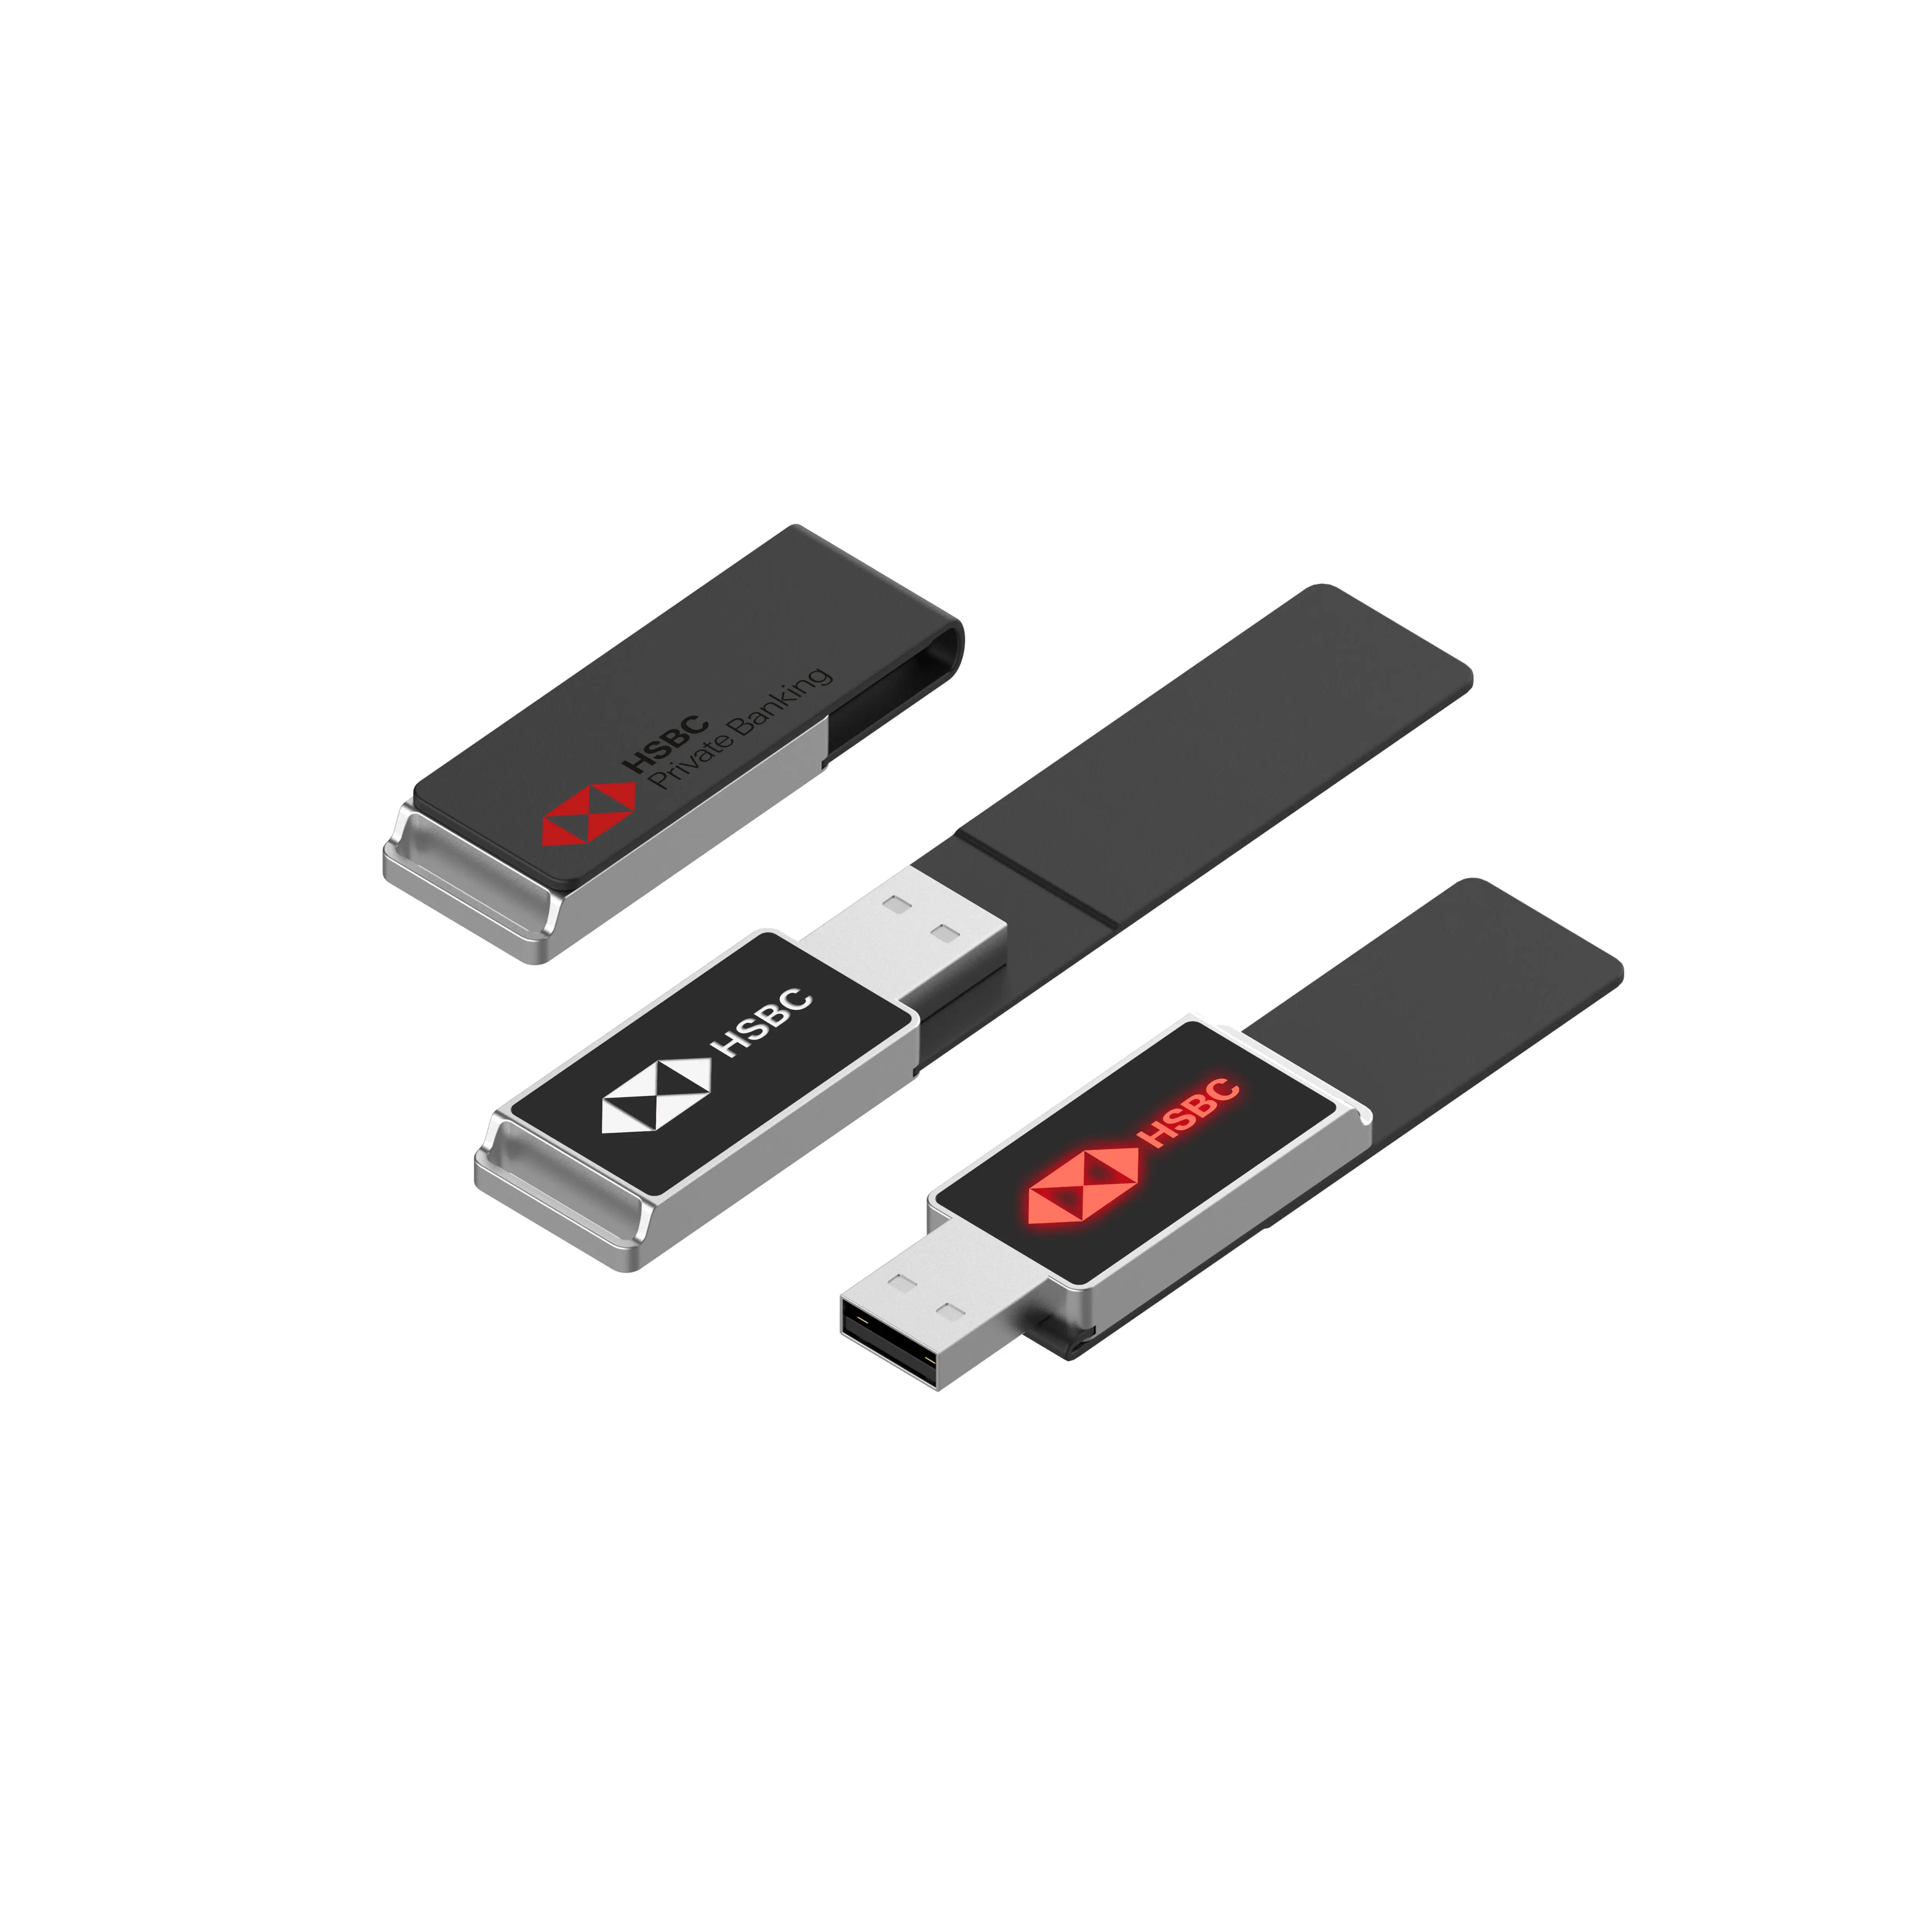 AiAude stik memori USB biru hitam, stik memori Flash Drive kulit 2024 128, stik memori USB untuk 2.0 GB 4GB 8GB 16GB 32GB 64GB 3.0 GB